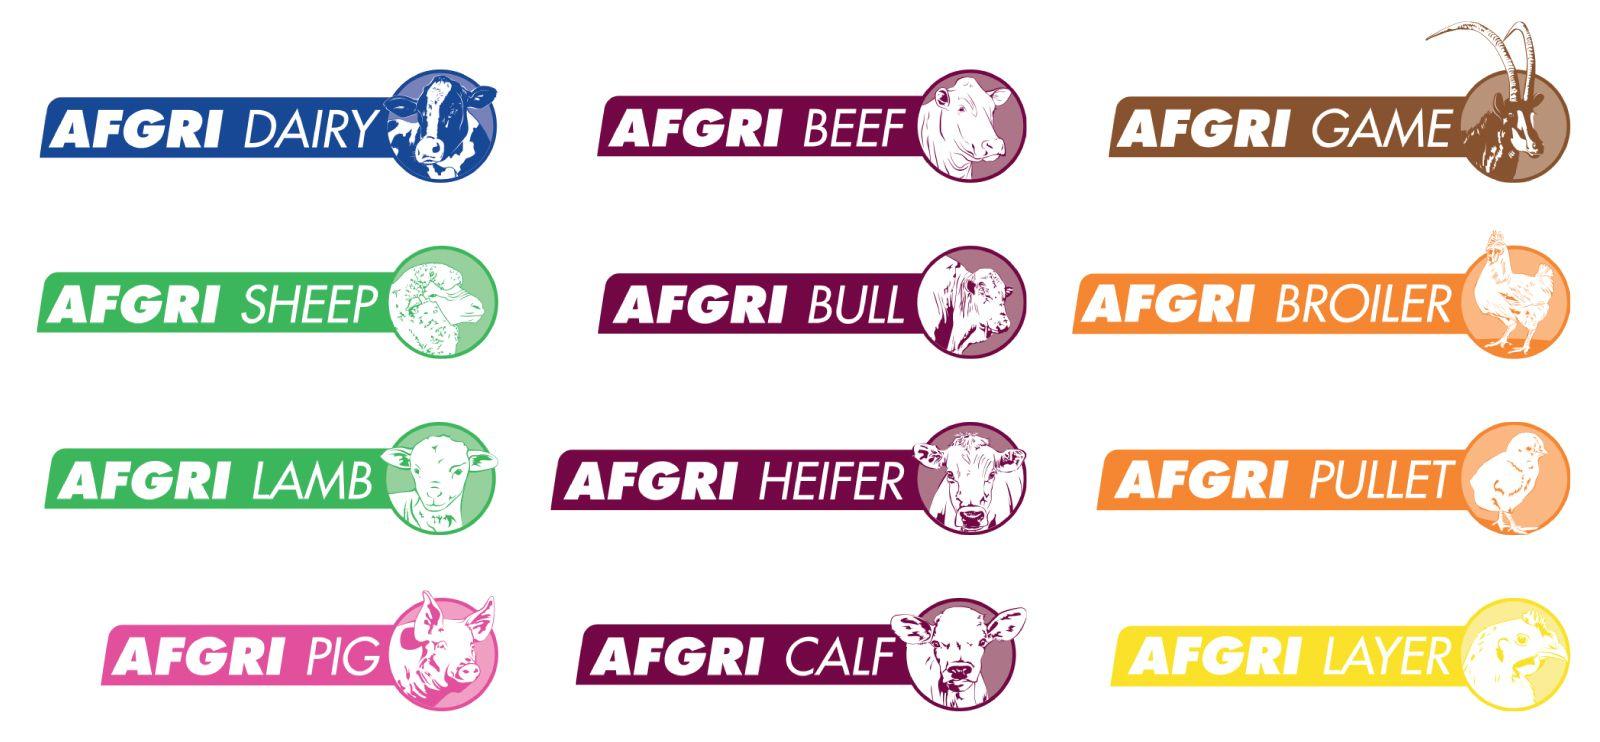 Animal Feed Logo - AFGRI Animal Feeds Logos Final1 Animal Feeds